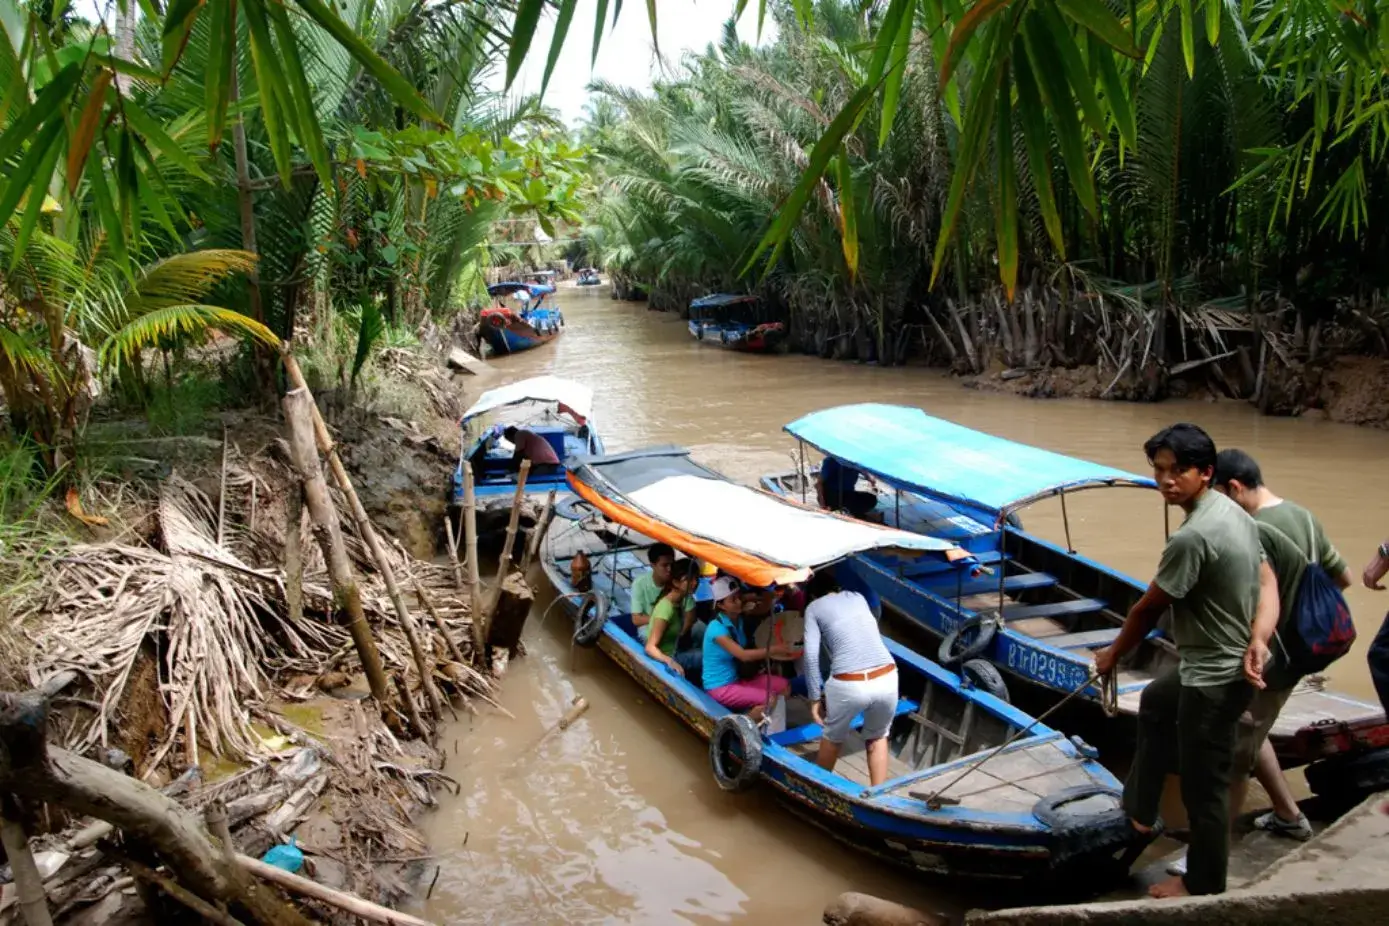 Mekong Delta - 11 Best Places to Visit in Vietnam